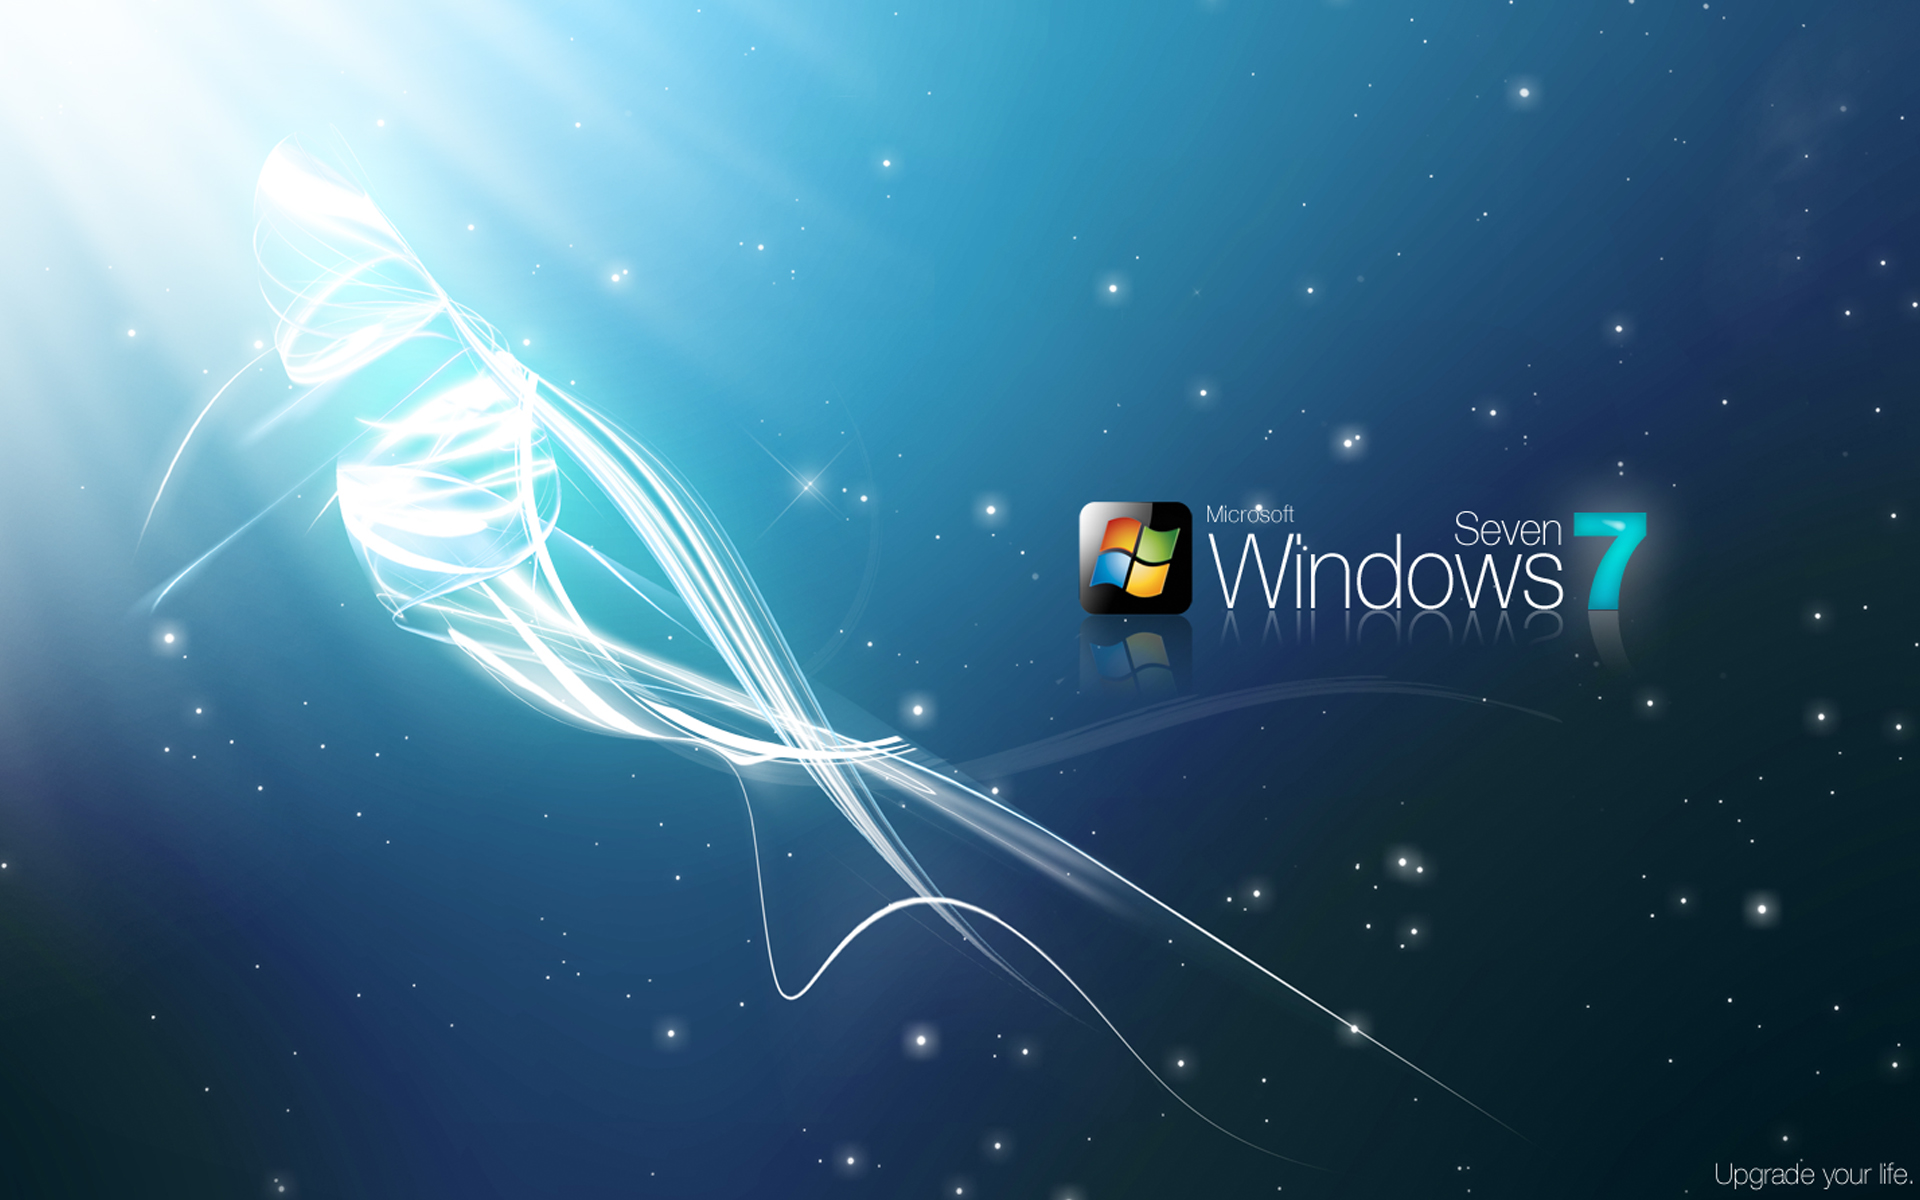 Windows_7_ultimate_01.jpg : 디아블로를 찾아서 Windows 7 바탕화면